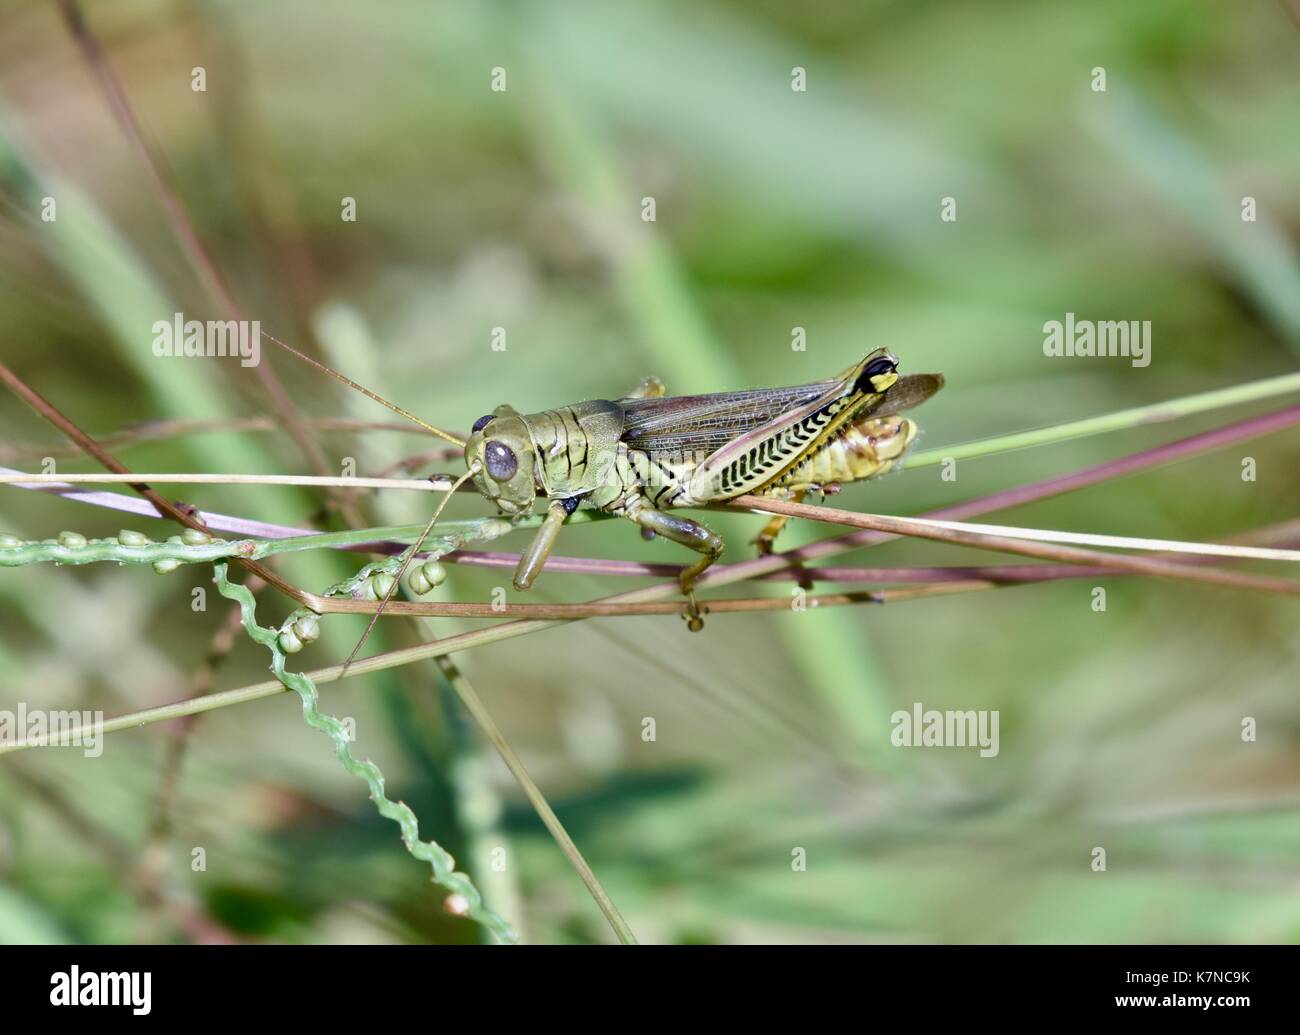 Grasshopper (Caelifera) on a blade of grass Stock Photo